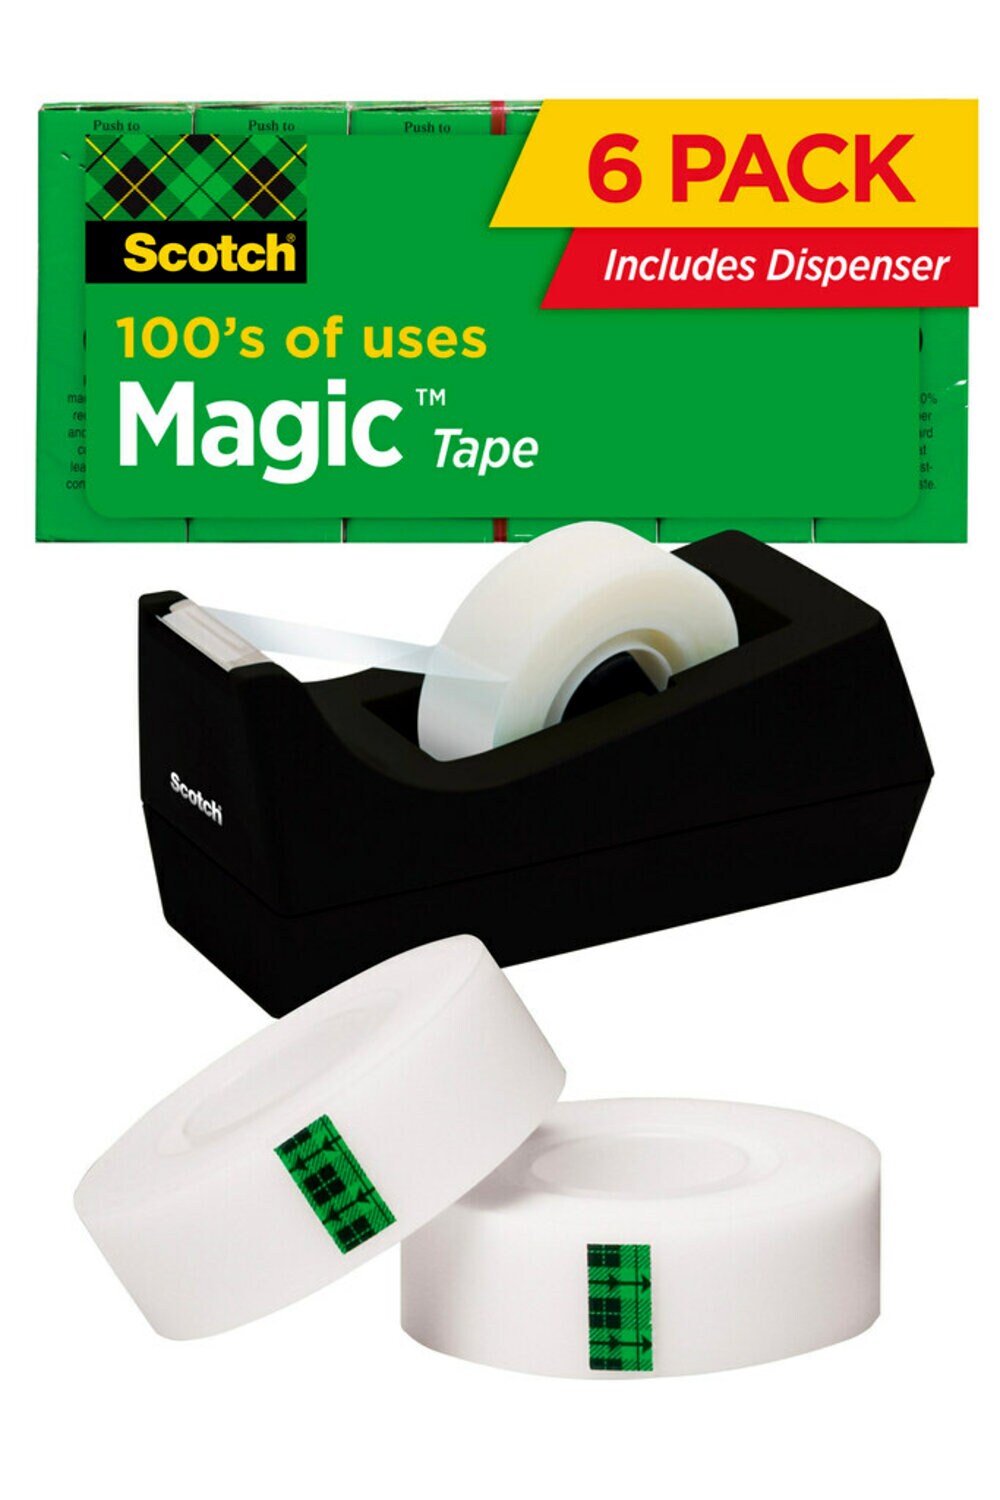 7100103287 - Scotch Magic Tape with Dispenser 810K6C38, 3/4 in x 1000 in (19 mm x 25,4 m) 6 Pack With Dispenser